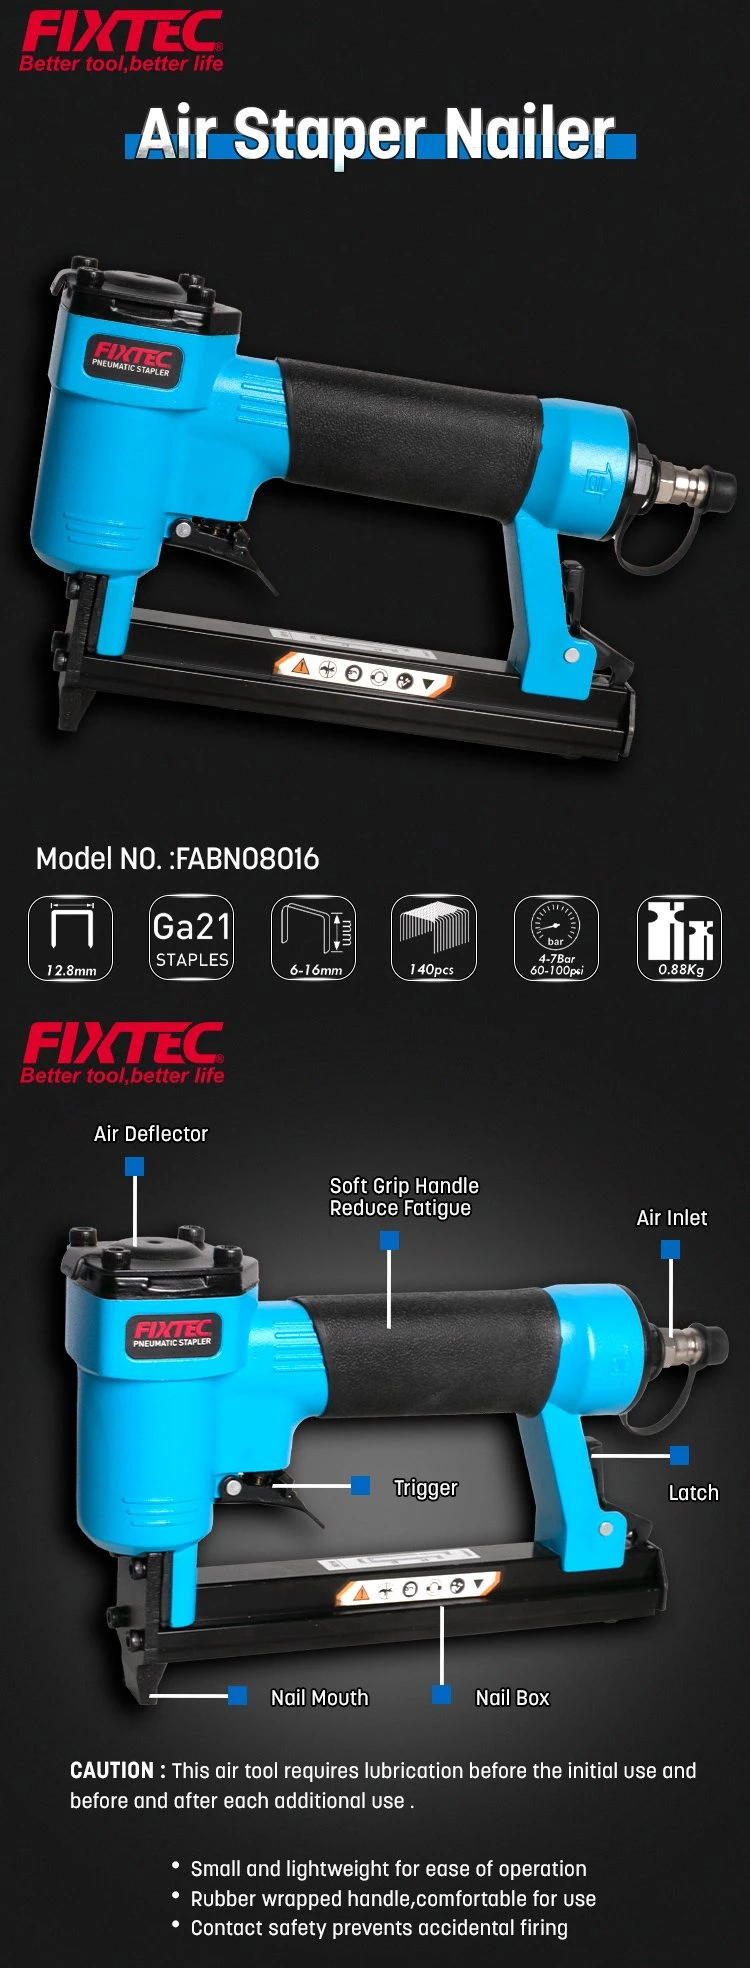 Fixtec Industrial Air Tools Easy-Open Latch-for Quick Pneumatic Air Stapler Nail Gun